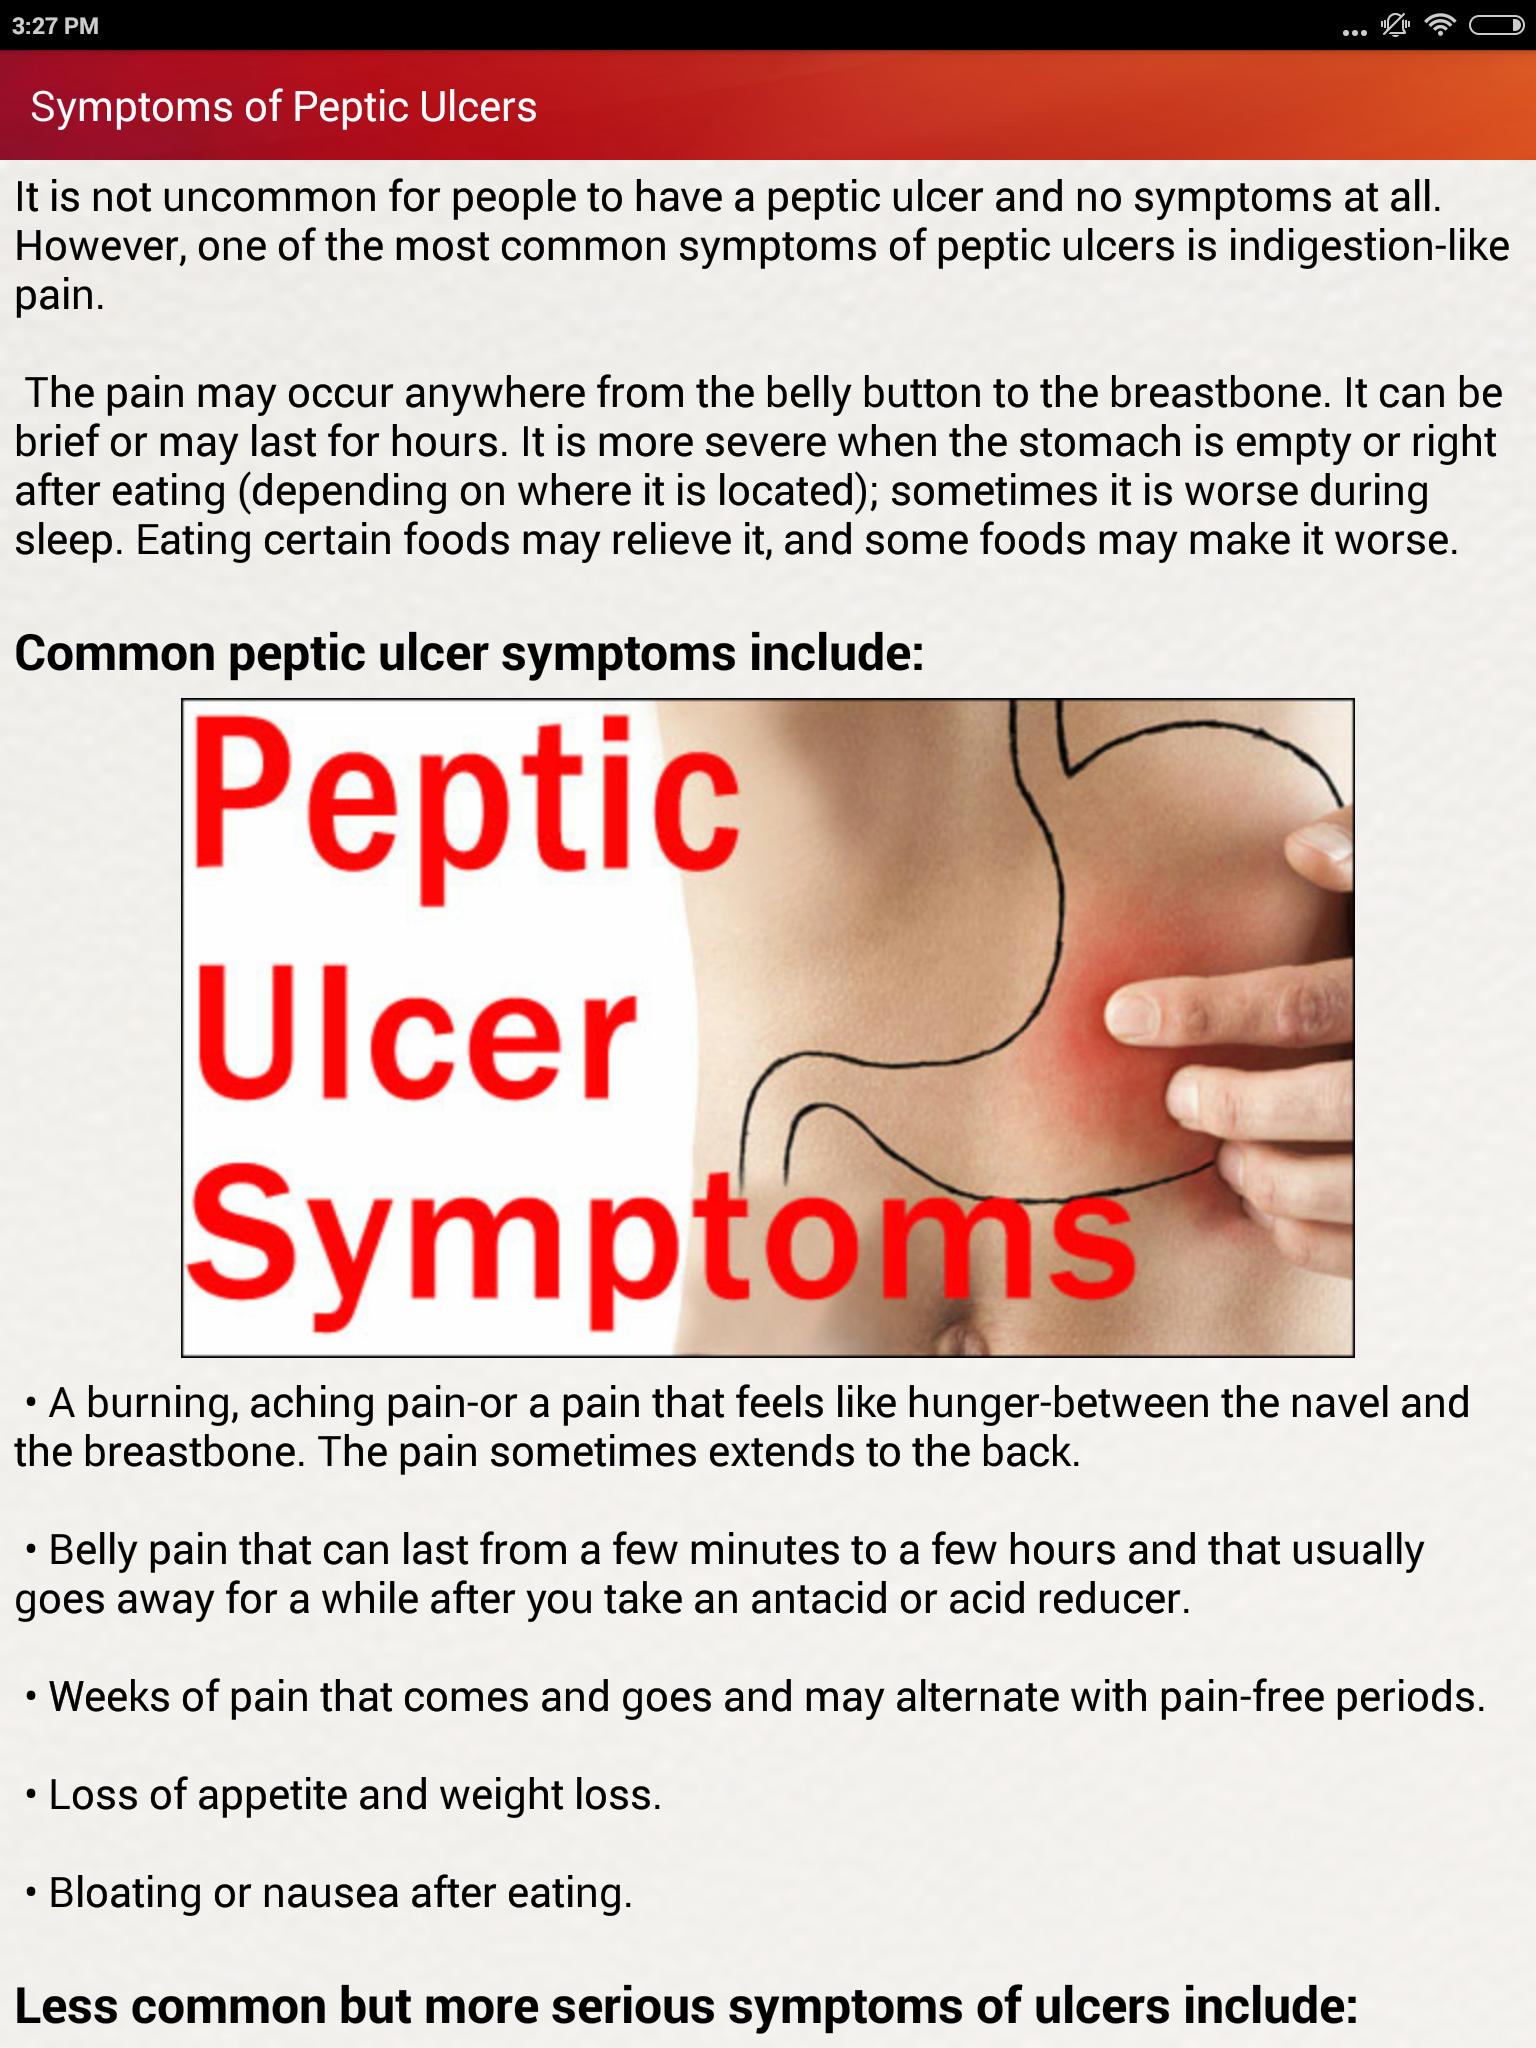 Peptic ulcer symptoms